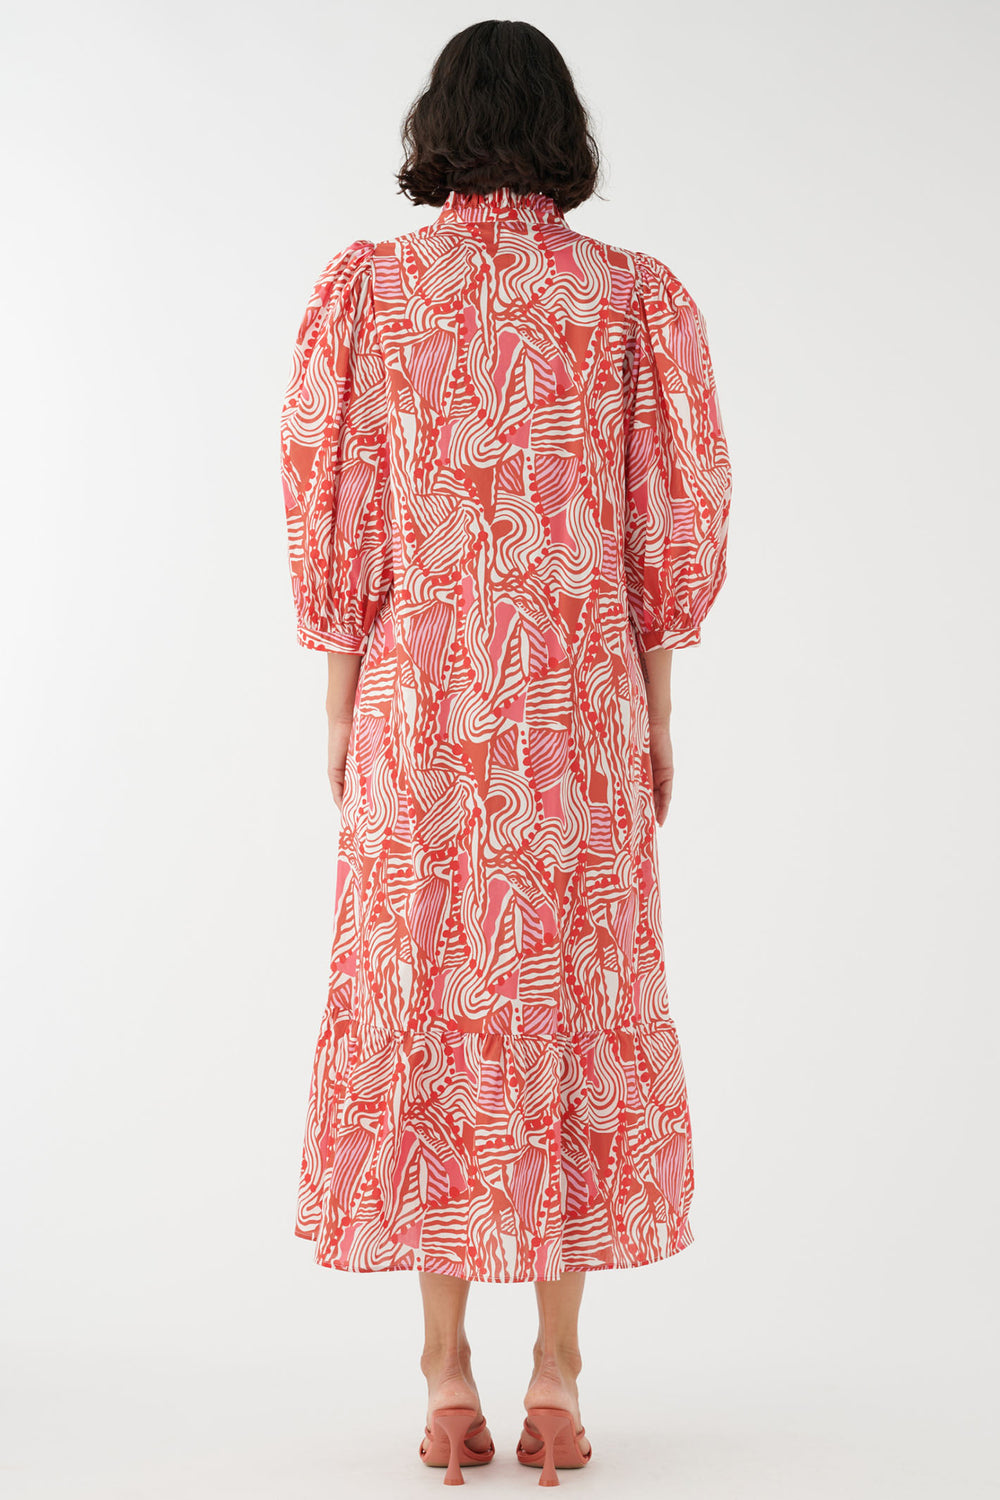 Dea Kudibal Mydea 1350424 5770 Pink Calavera Terracotta Cotton Dress - Olivia Grace Fashion